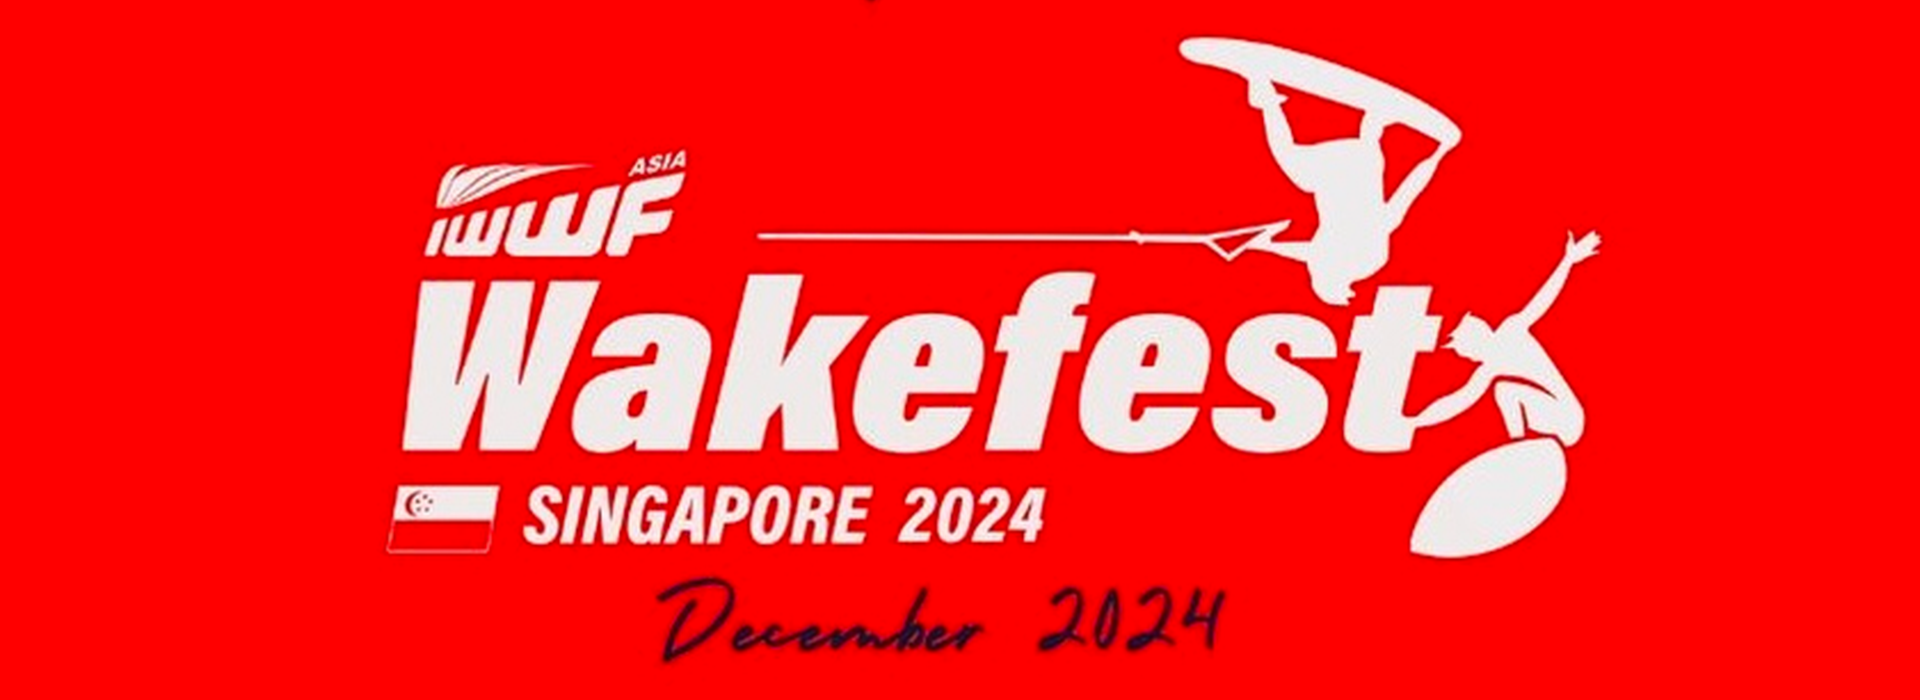 IWWF Asia Wakefest Singapore 